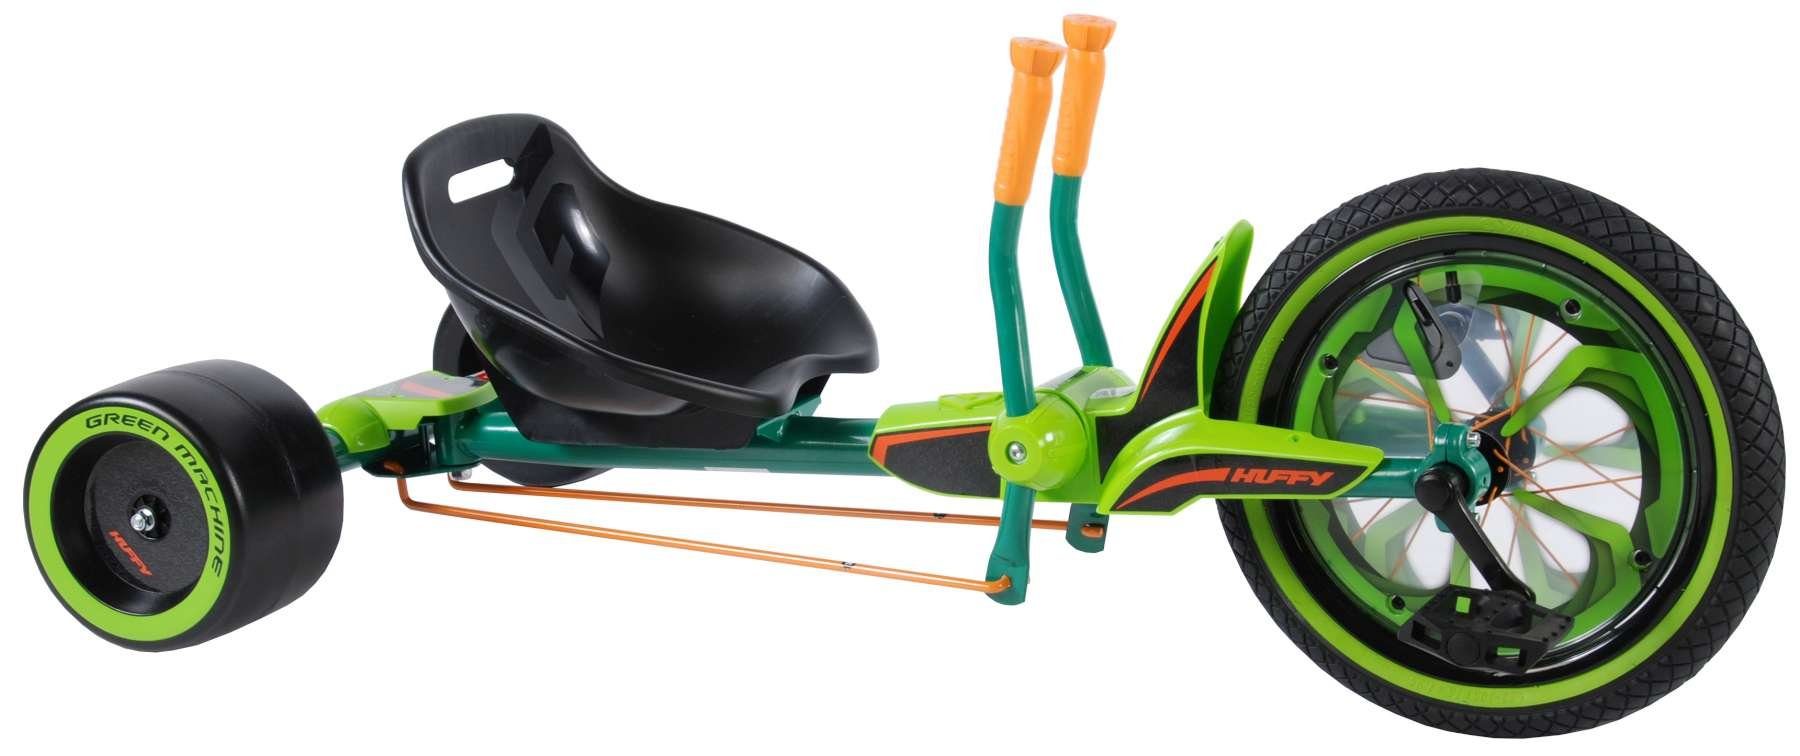 LeNoSa Go-Kart Green Machine - TRIFT DRIKE 180 ° Rotation - Kinder  Tretfahrzeug Dreirad 16 Zoll - Alter 5+